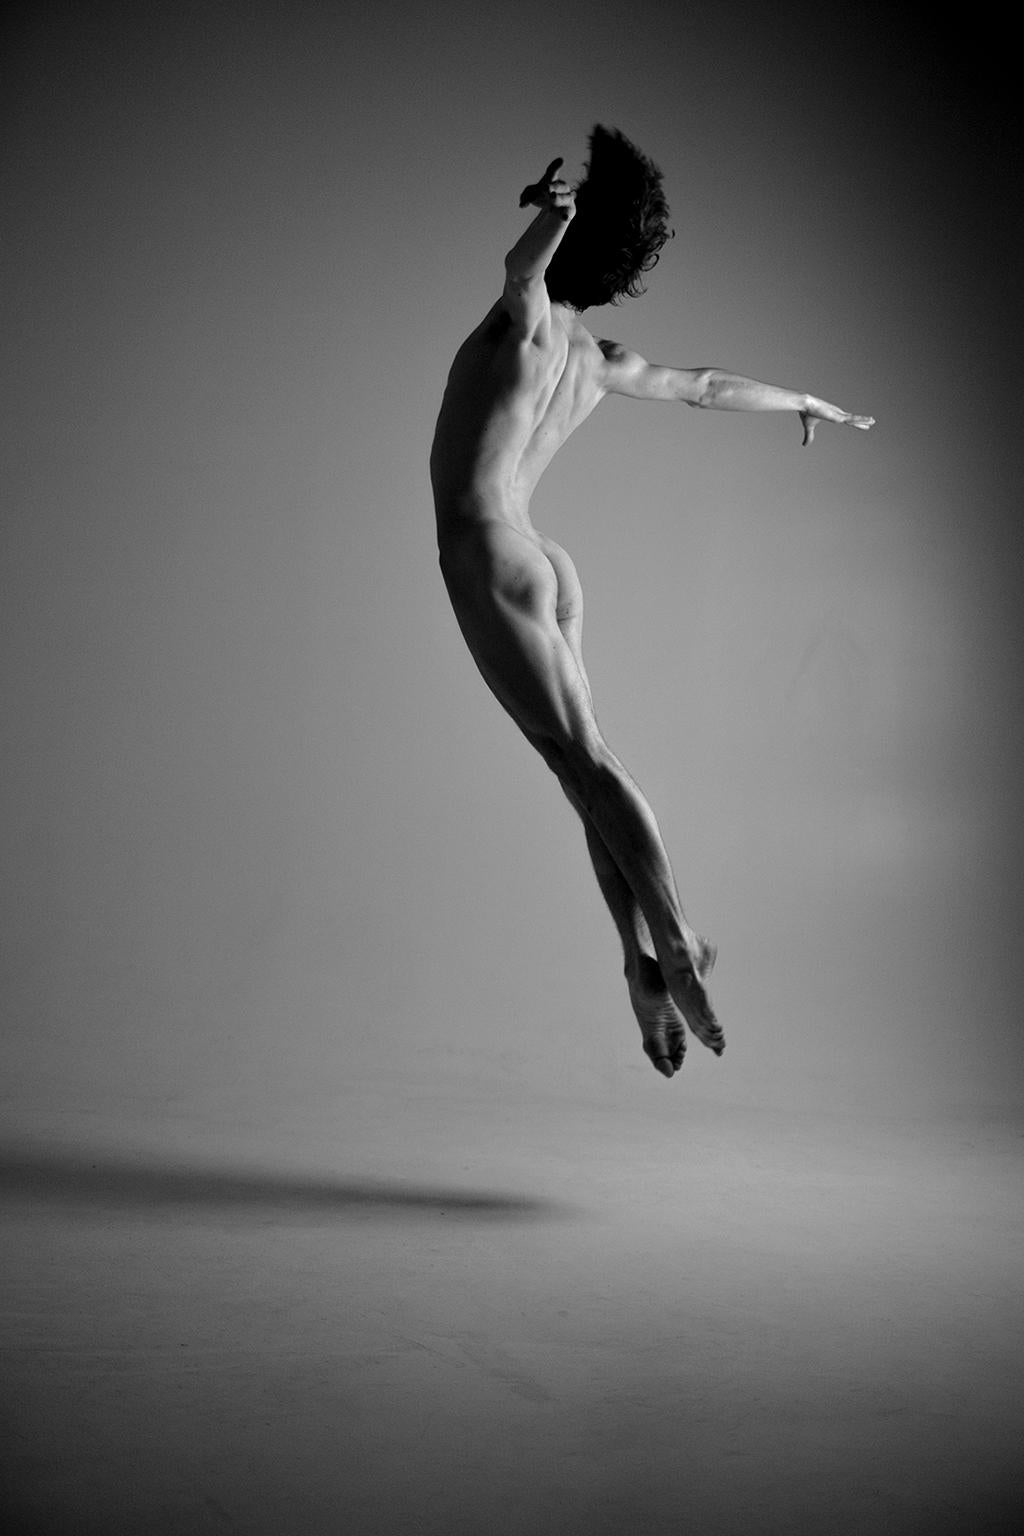 Ricky Cohete Black and White Photograph - Apertura II. The Bailarín, series. Male Nude dancer Black & White photograph